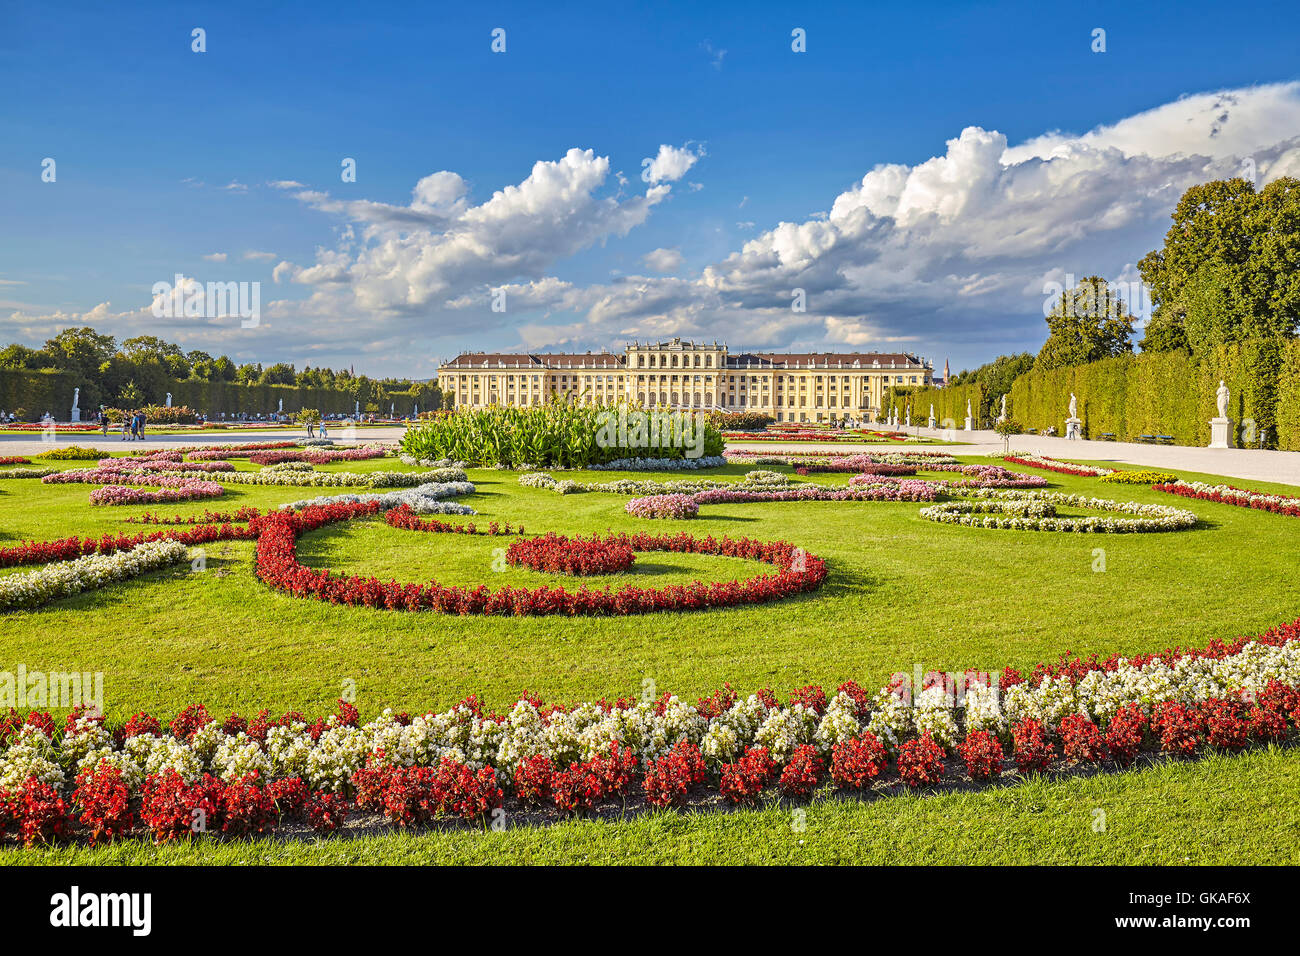 Garden in the Schonbrunn Palace complex. Stock Photo